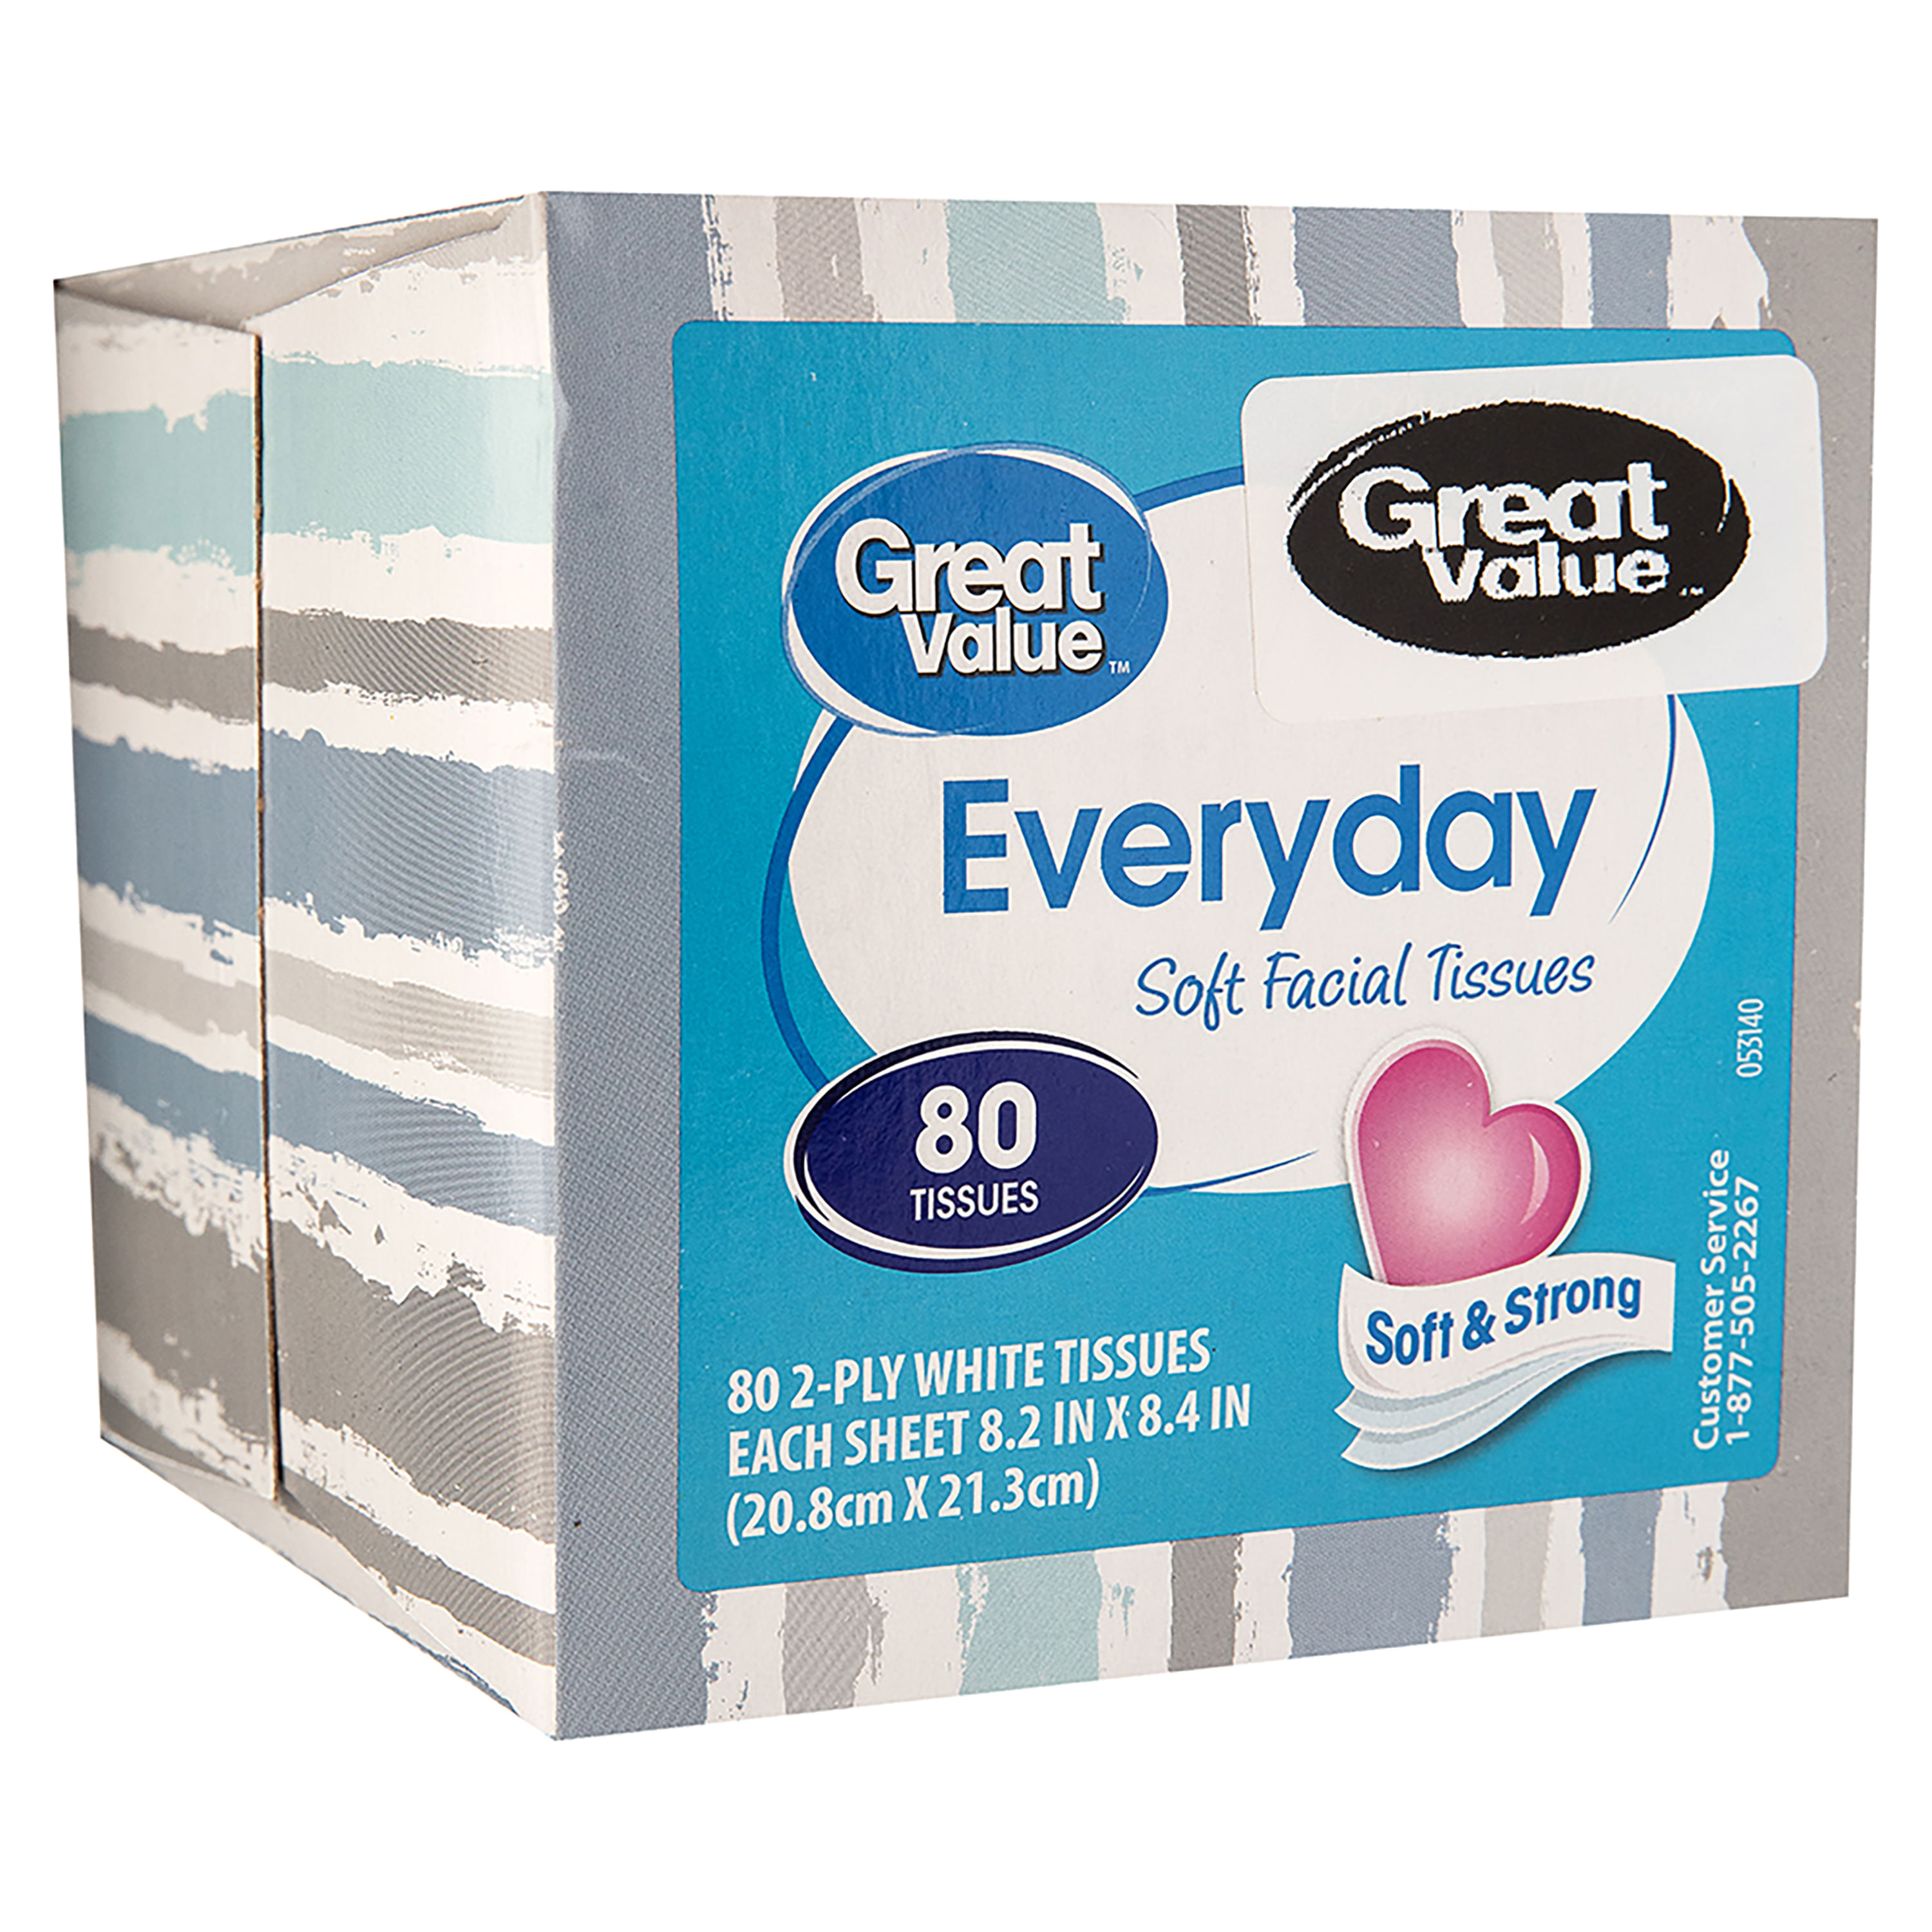 Pañuelos Faciales (80 tissues) 1 caja - Avanza Estética